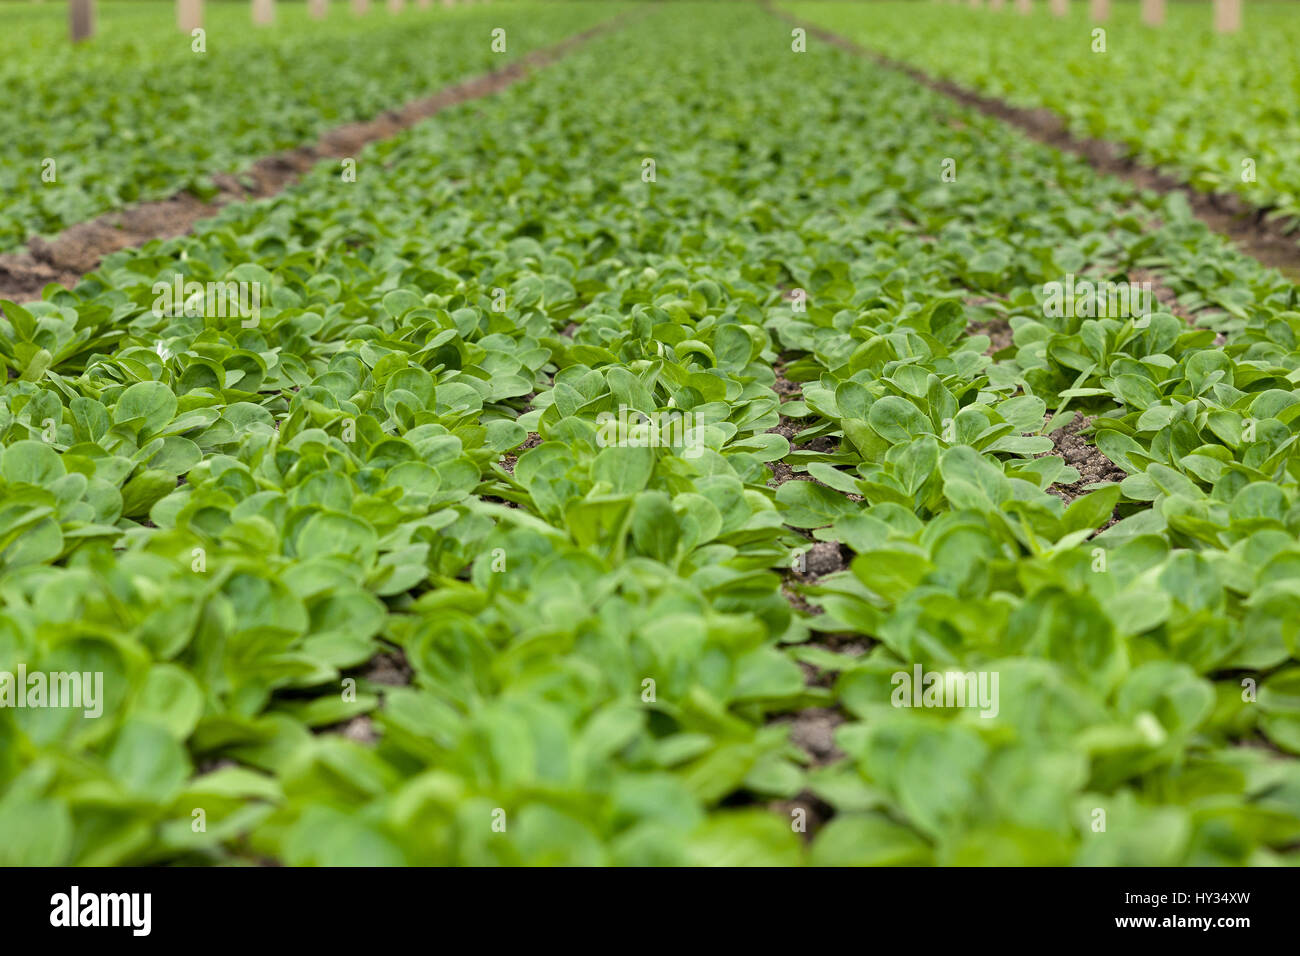 Close up des aliments issus de la culture du maïs en salade - Valerianella locusta - cultiver en serre ou sous serre. Banque D'Images